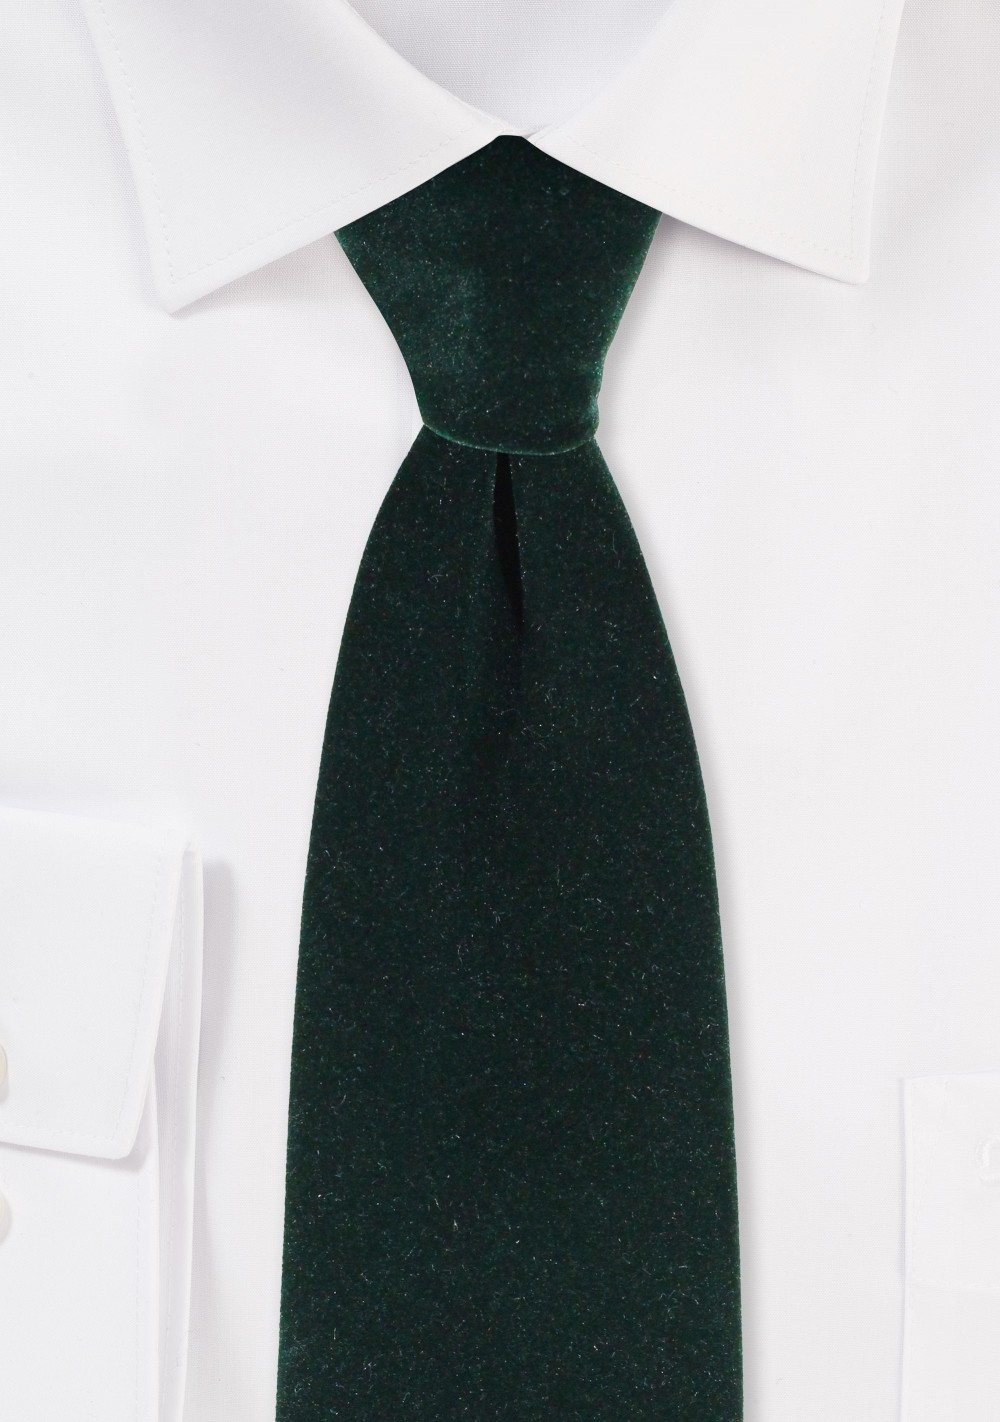 Luxe Velvet Necktie in Hunter Green